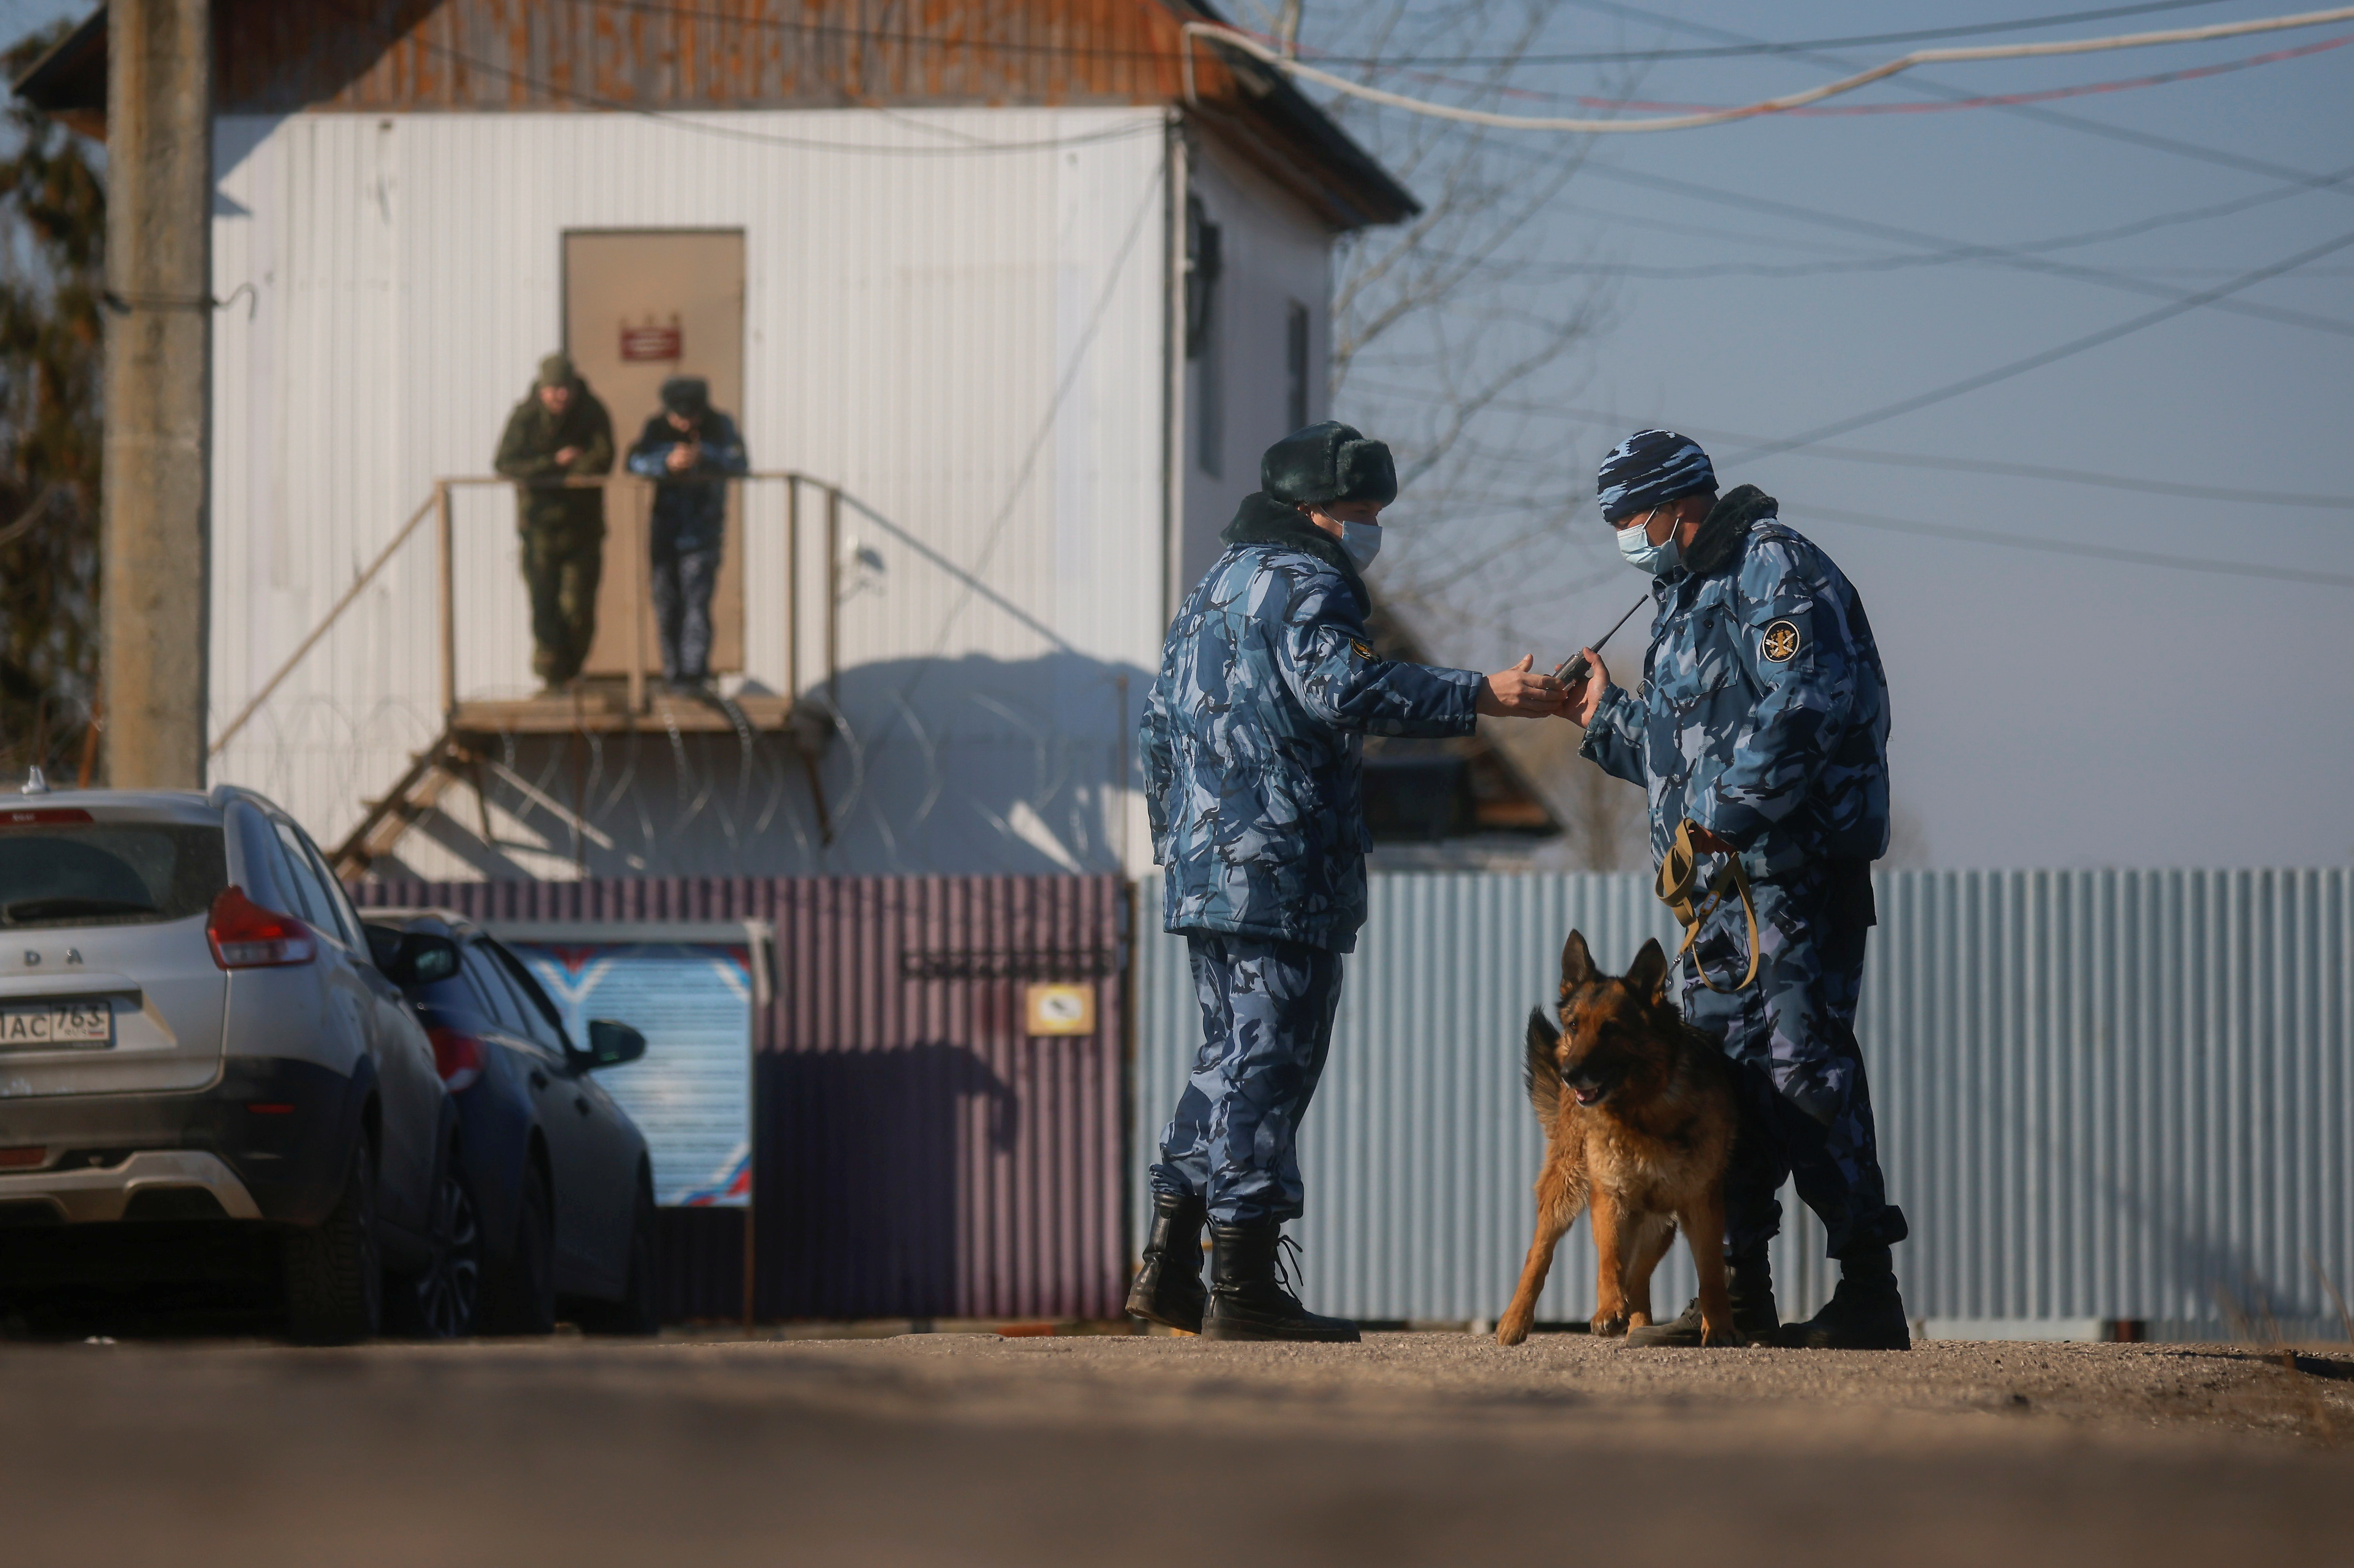 Guardias de seguridad frente a la colonia penal (REUTERS/Maxim Shemetov)